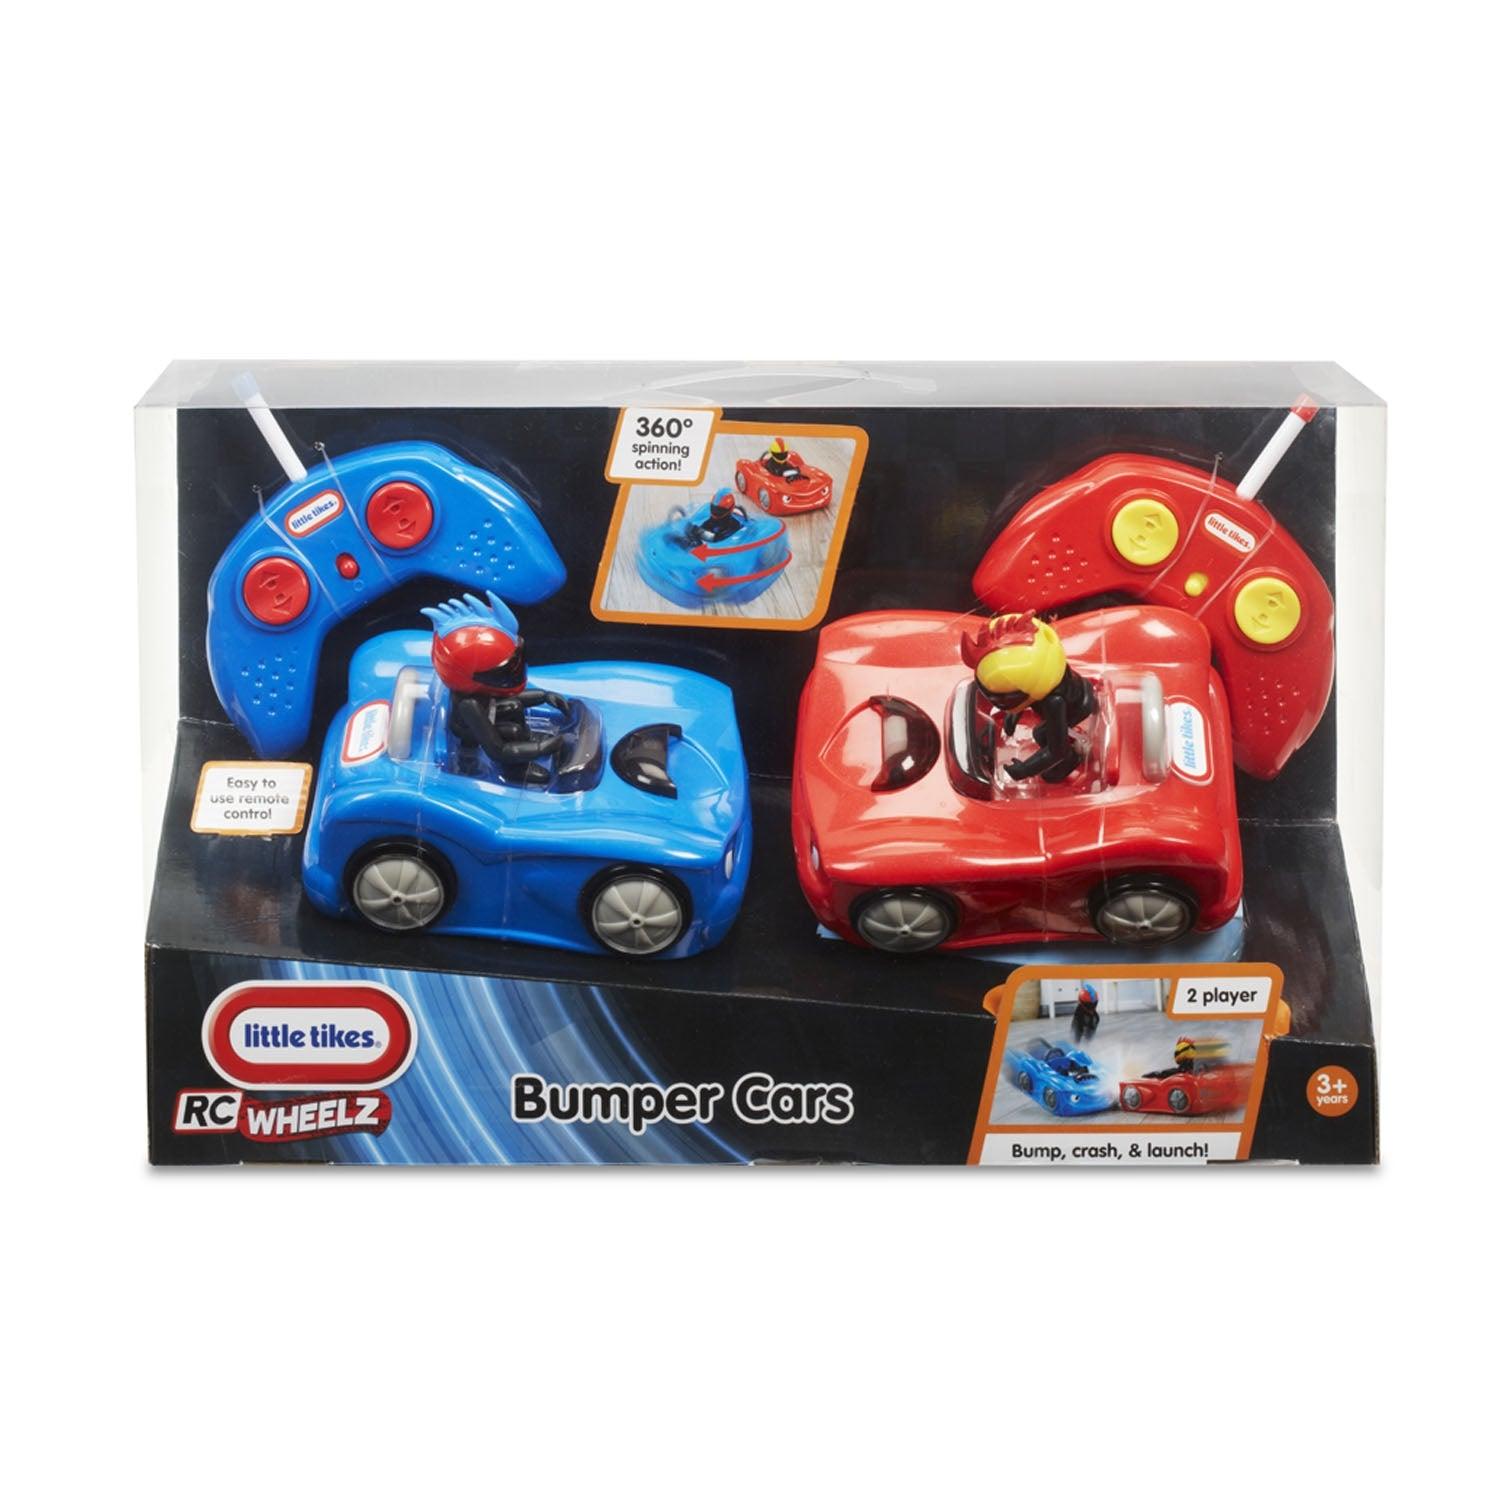 Bumper Car Remote Control Toy: Factors to Consider Before Buying a Bumper Car Remote Control Toy